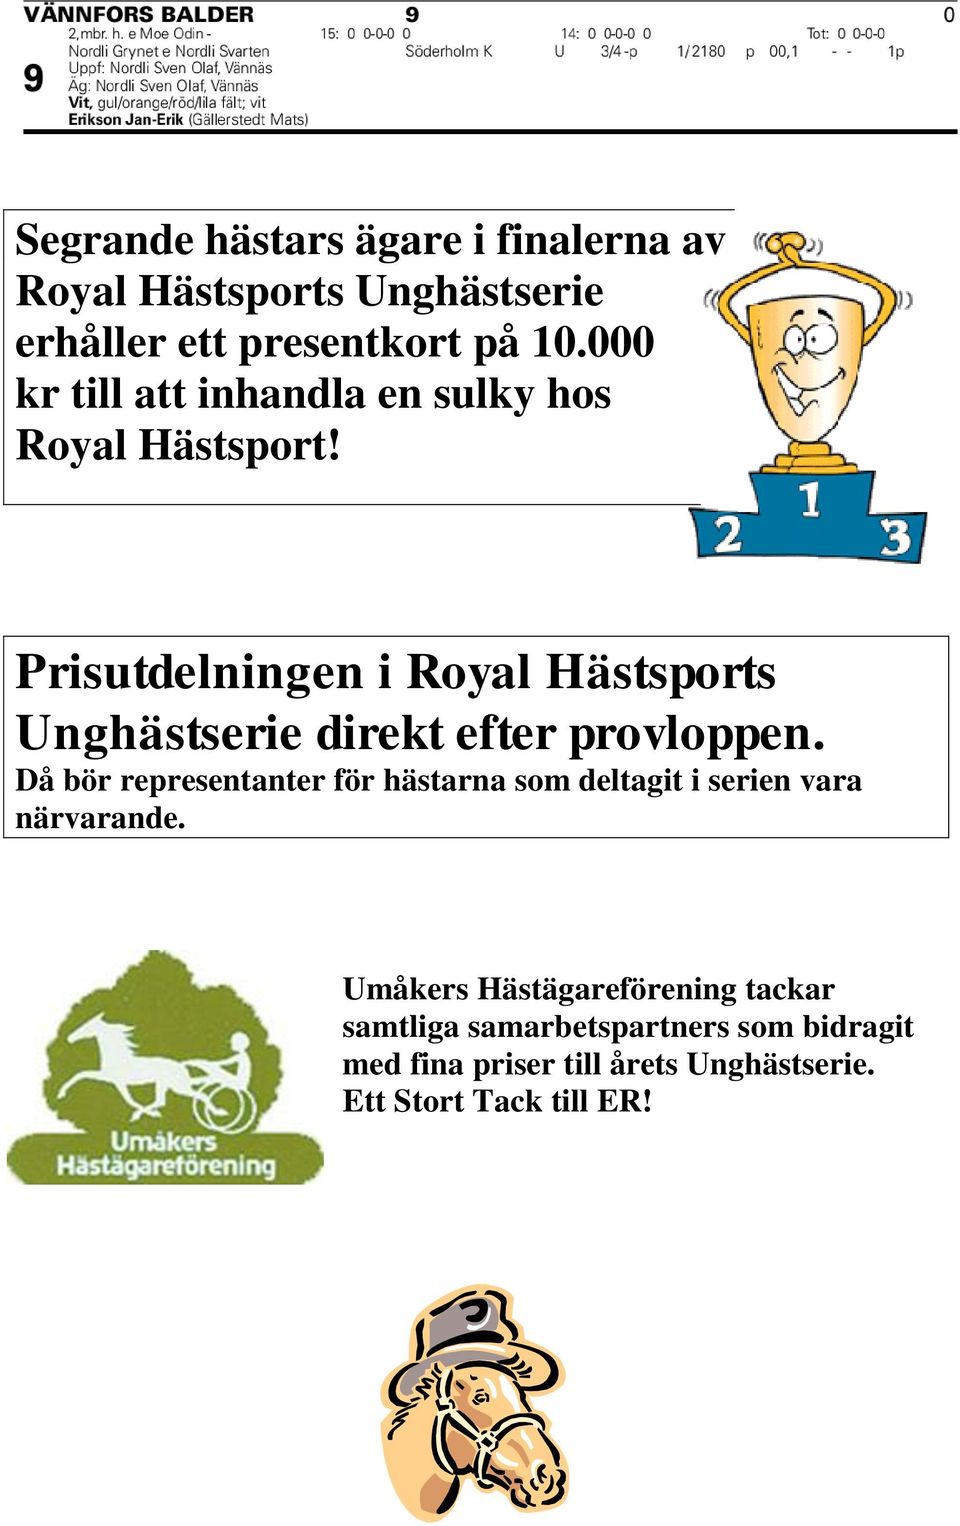 Prisutdelningen i Royal Hästsports Unghästserie direkt efter provloppen.